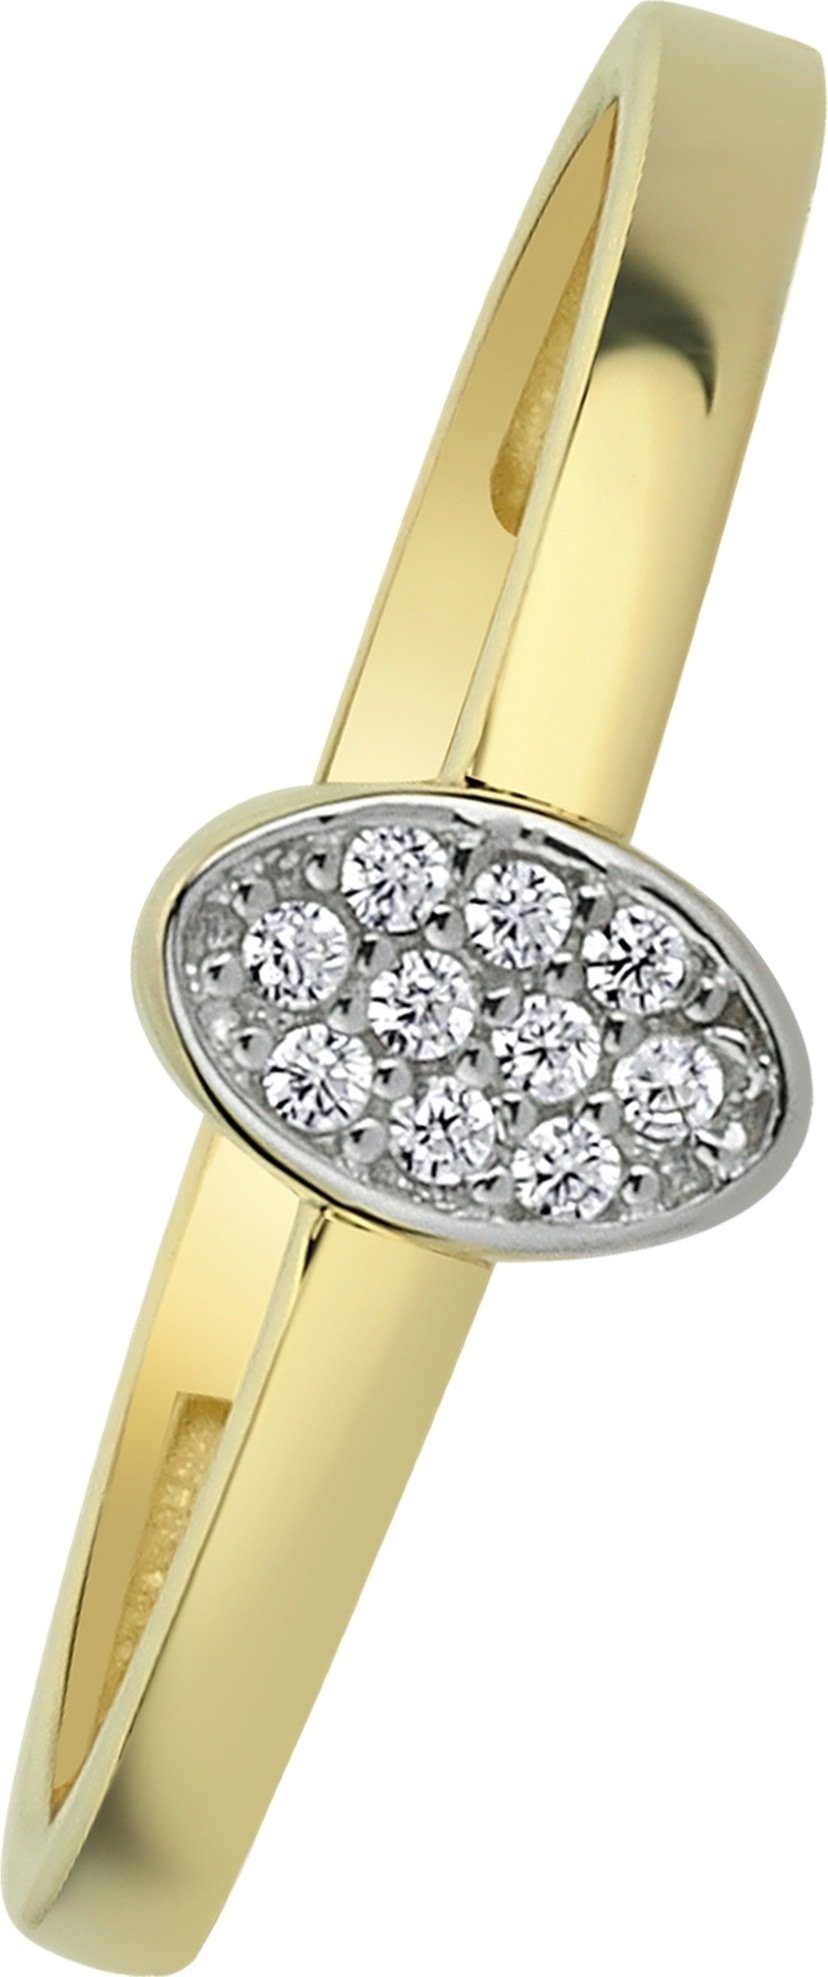 Ring aus Goldgold Gr.58 Ring gold Damen weiß, 333er Gelbgold Balia 8Karat - Damen Goldring Balia Karat, Farbe: Oval 8 (Fingerring),